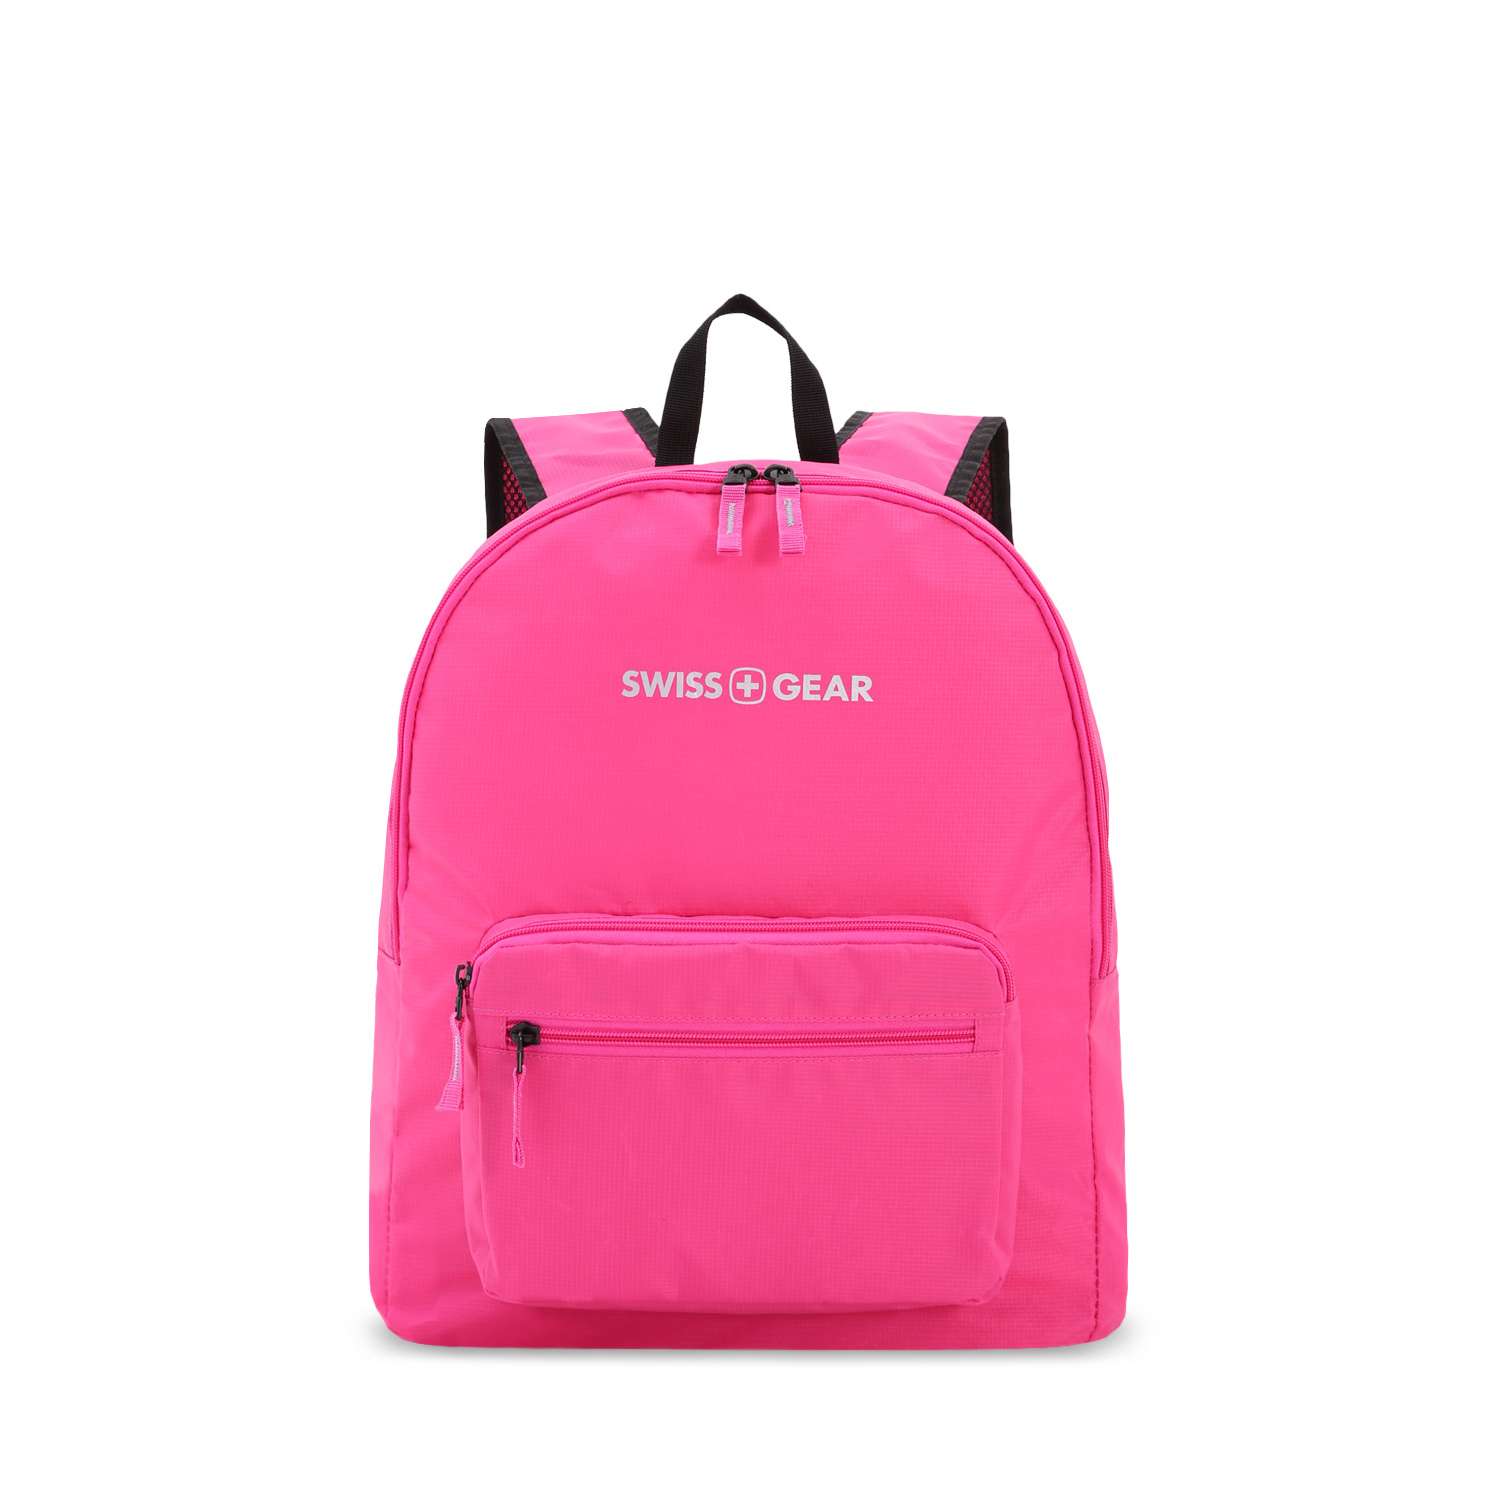 Рюкзак Swissgear складной розовый - фото 1